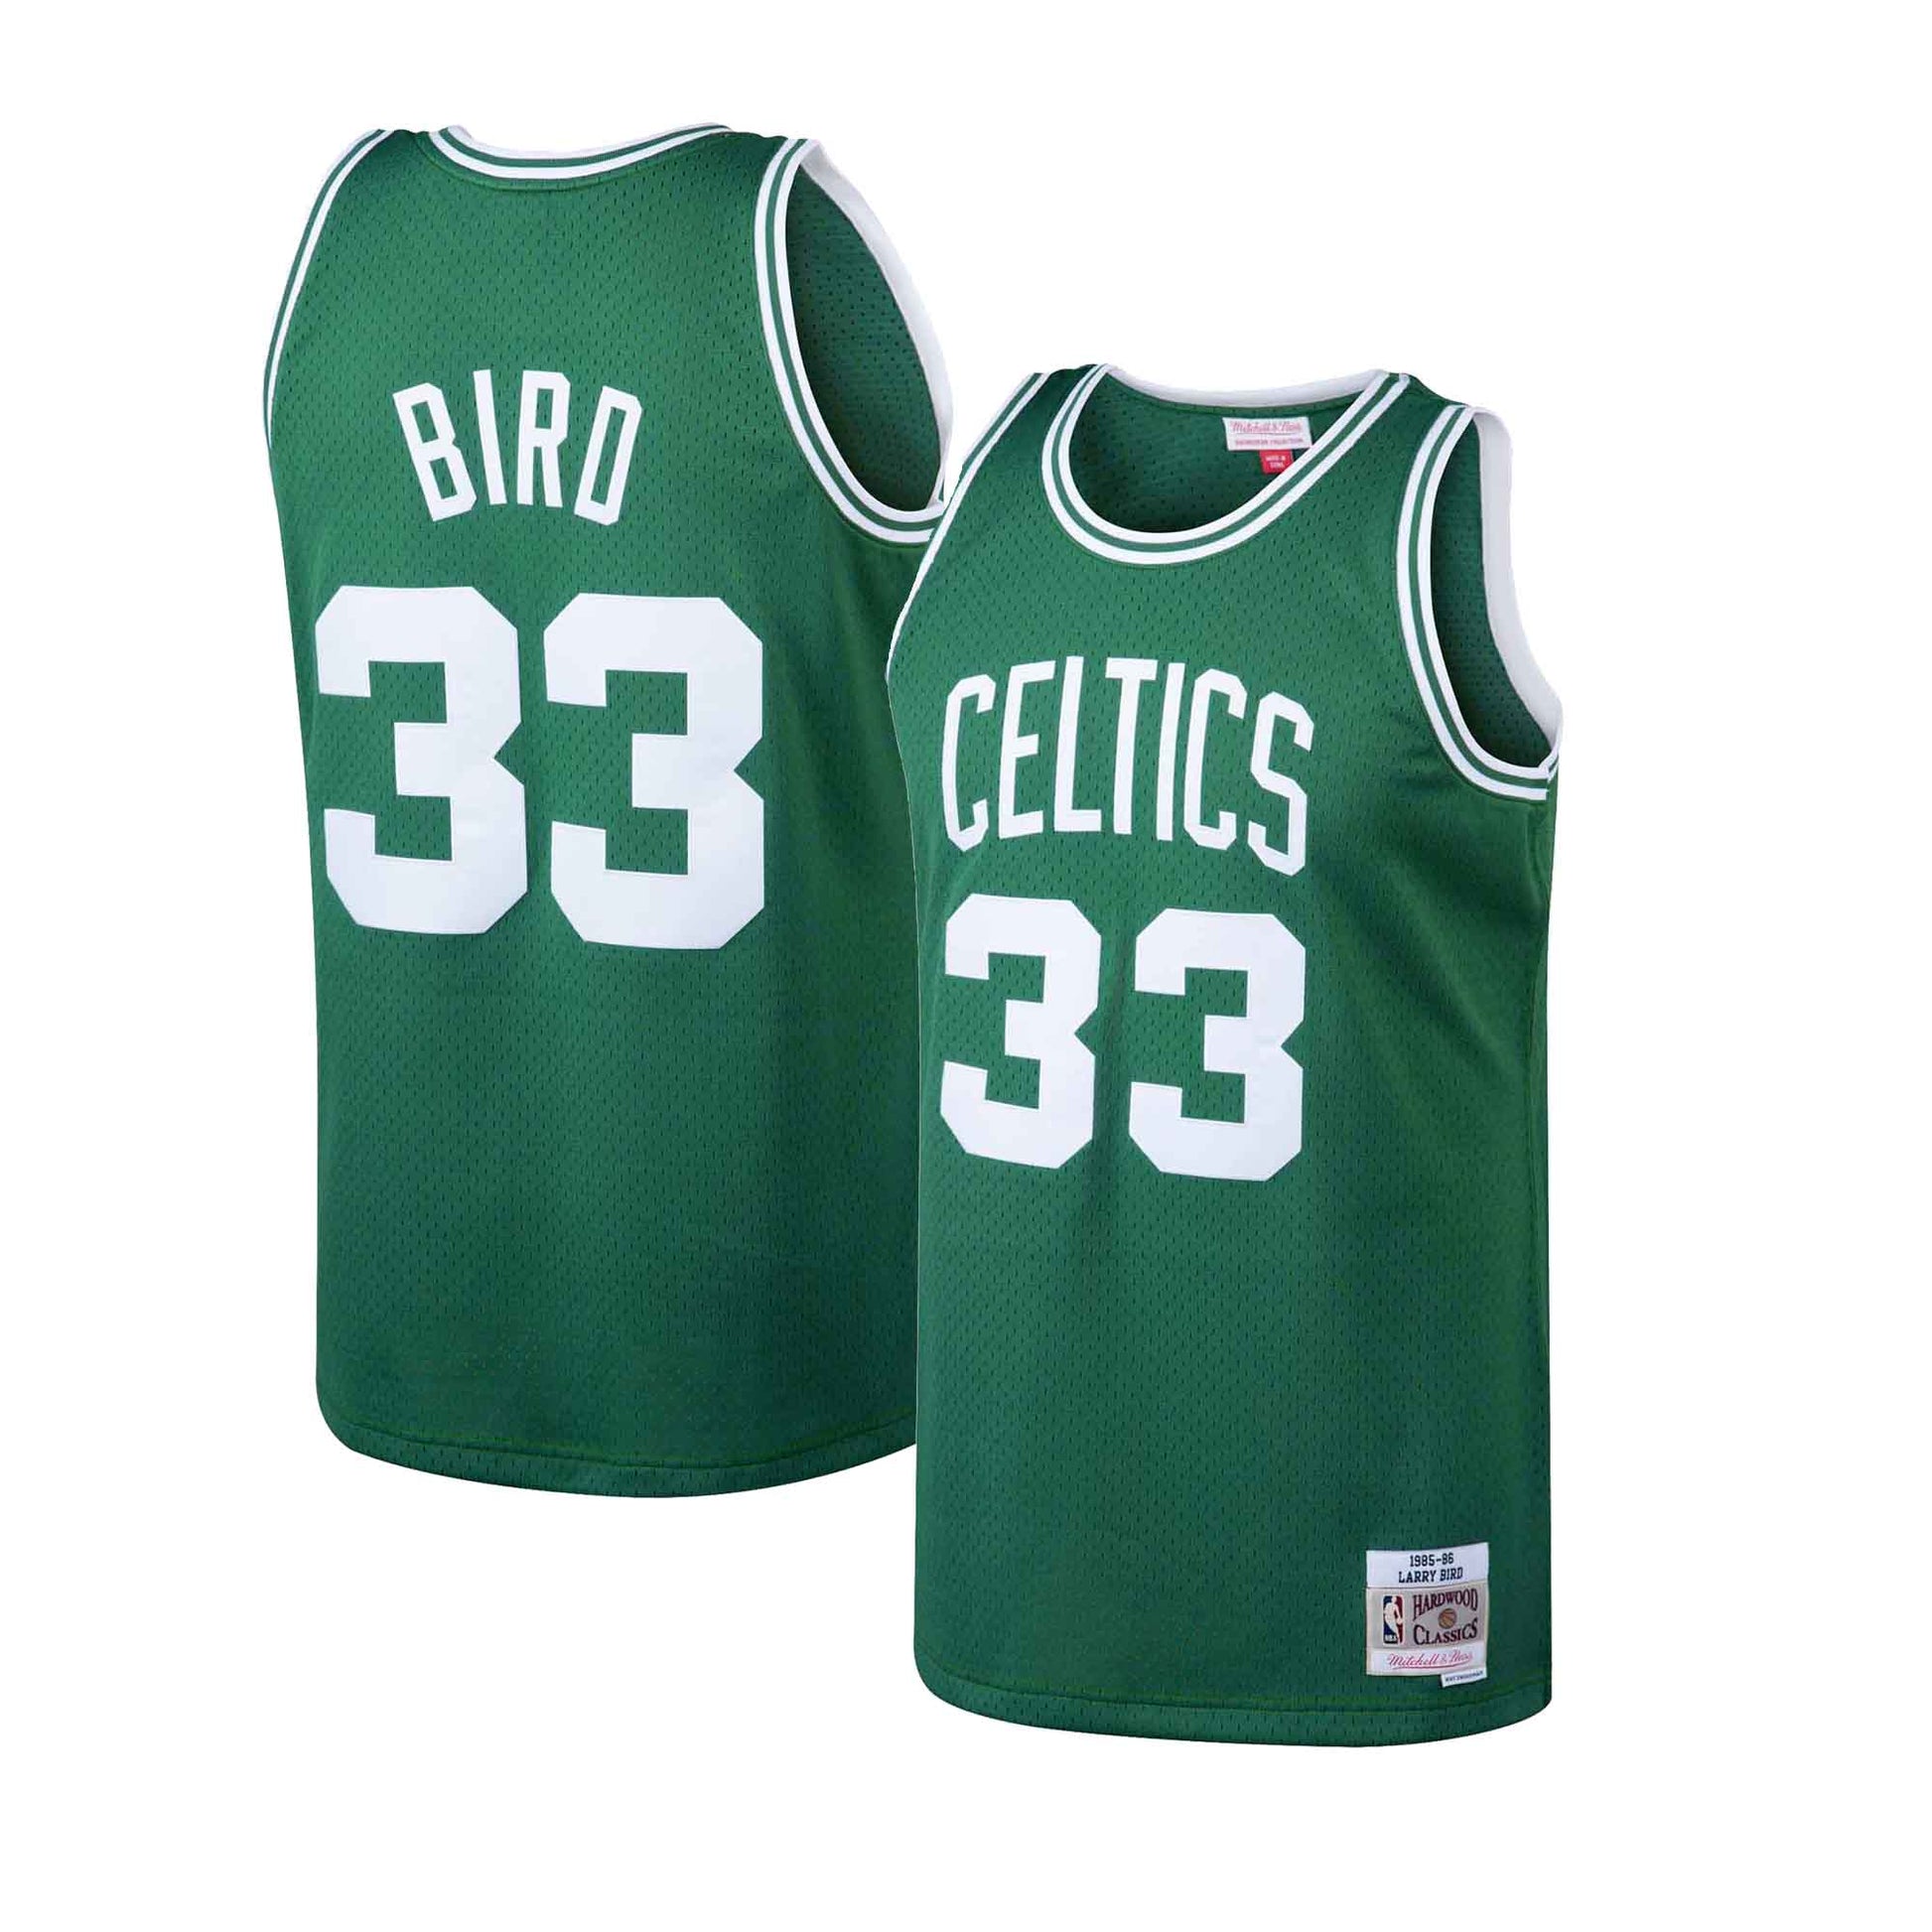 Boston Celtics Larry Bird Autographed Authentic Green Mitchell